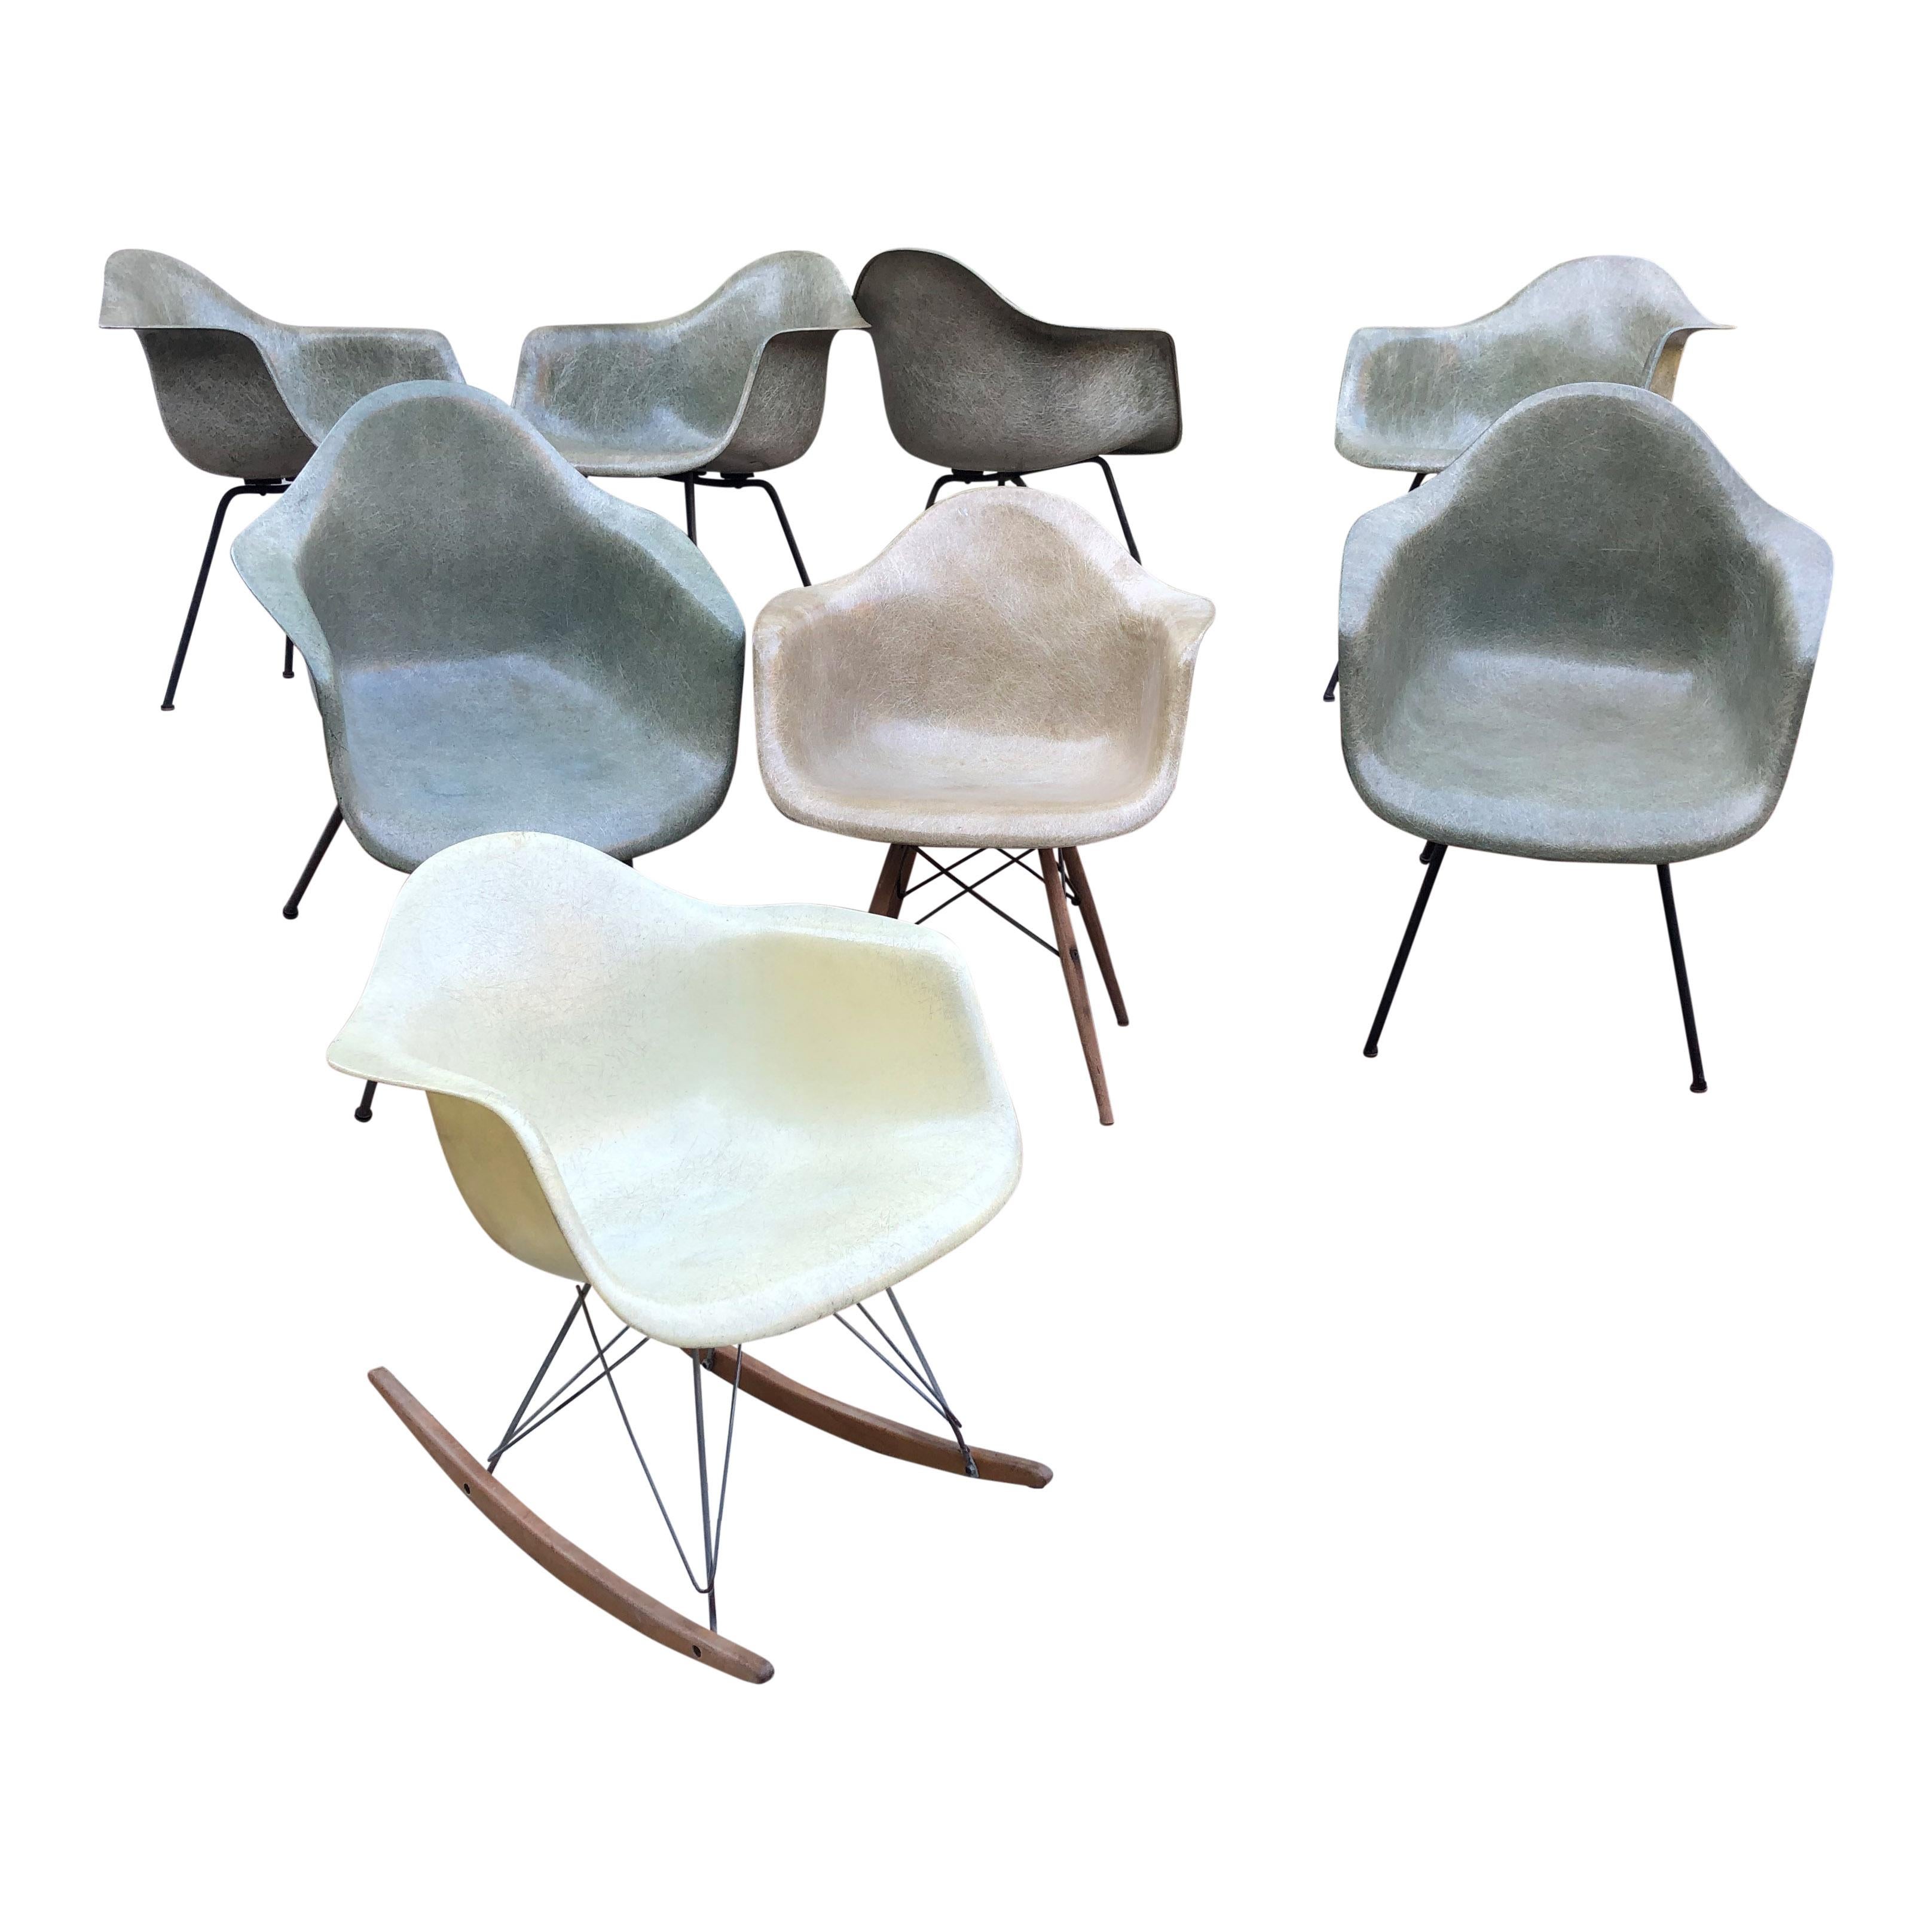 6 Eames Herman Miller Seafoam Green Zenith DAX Chair, Midcentury Collectible 1